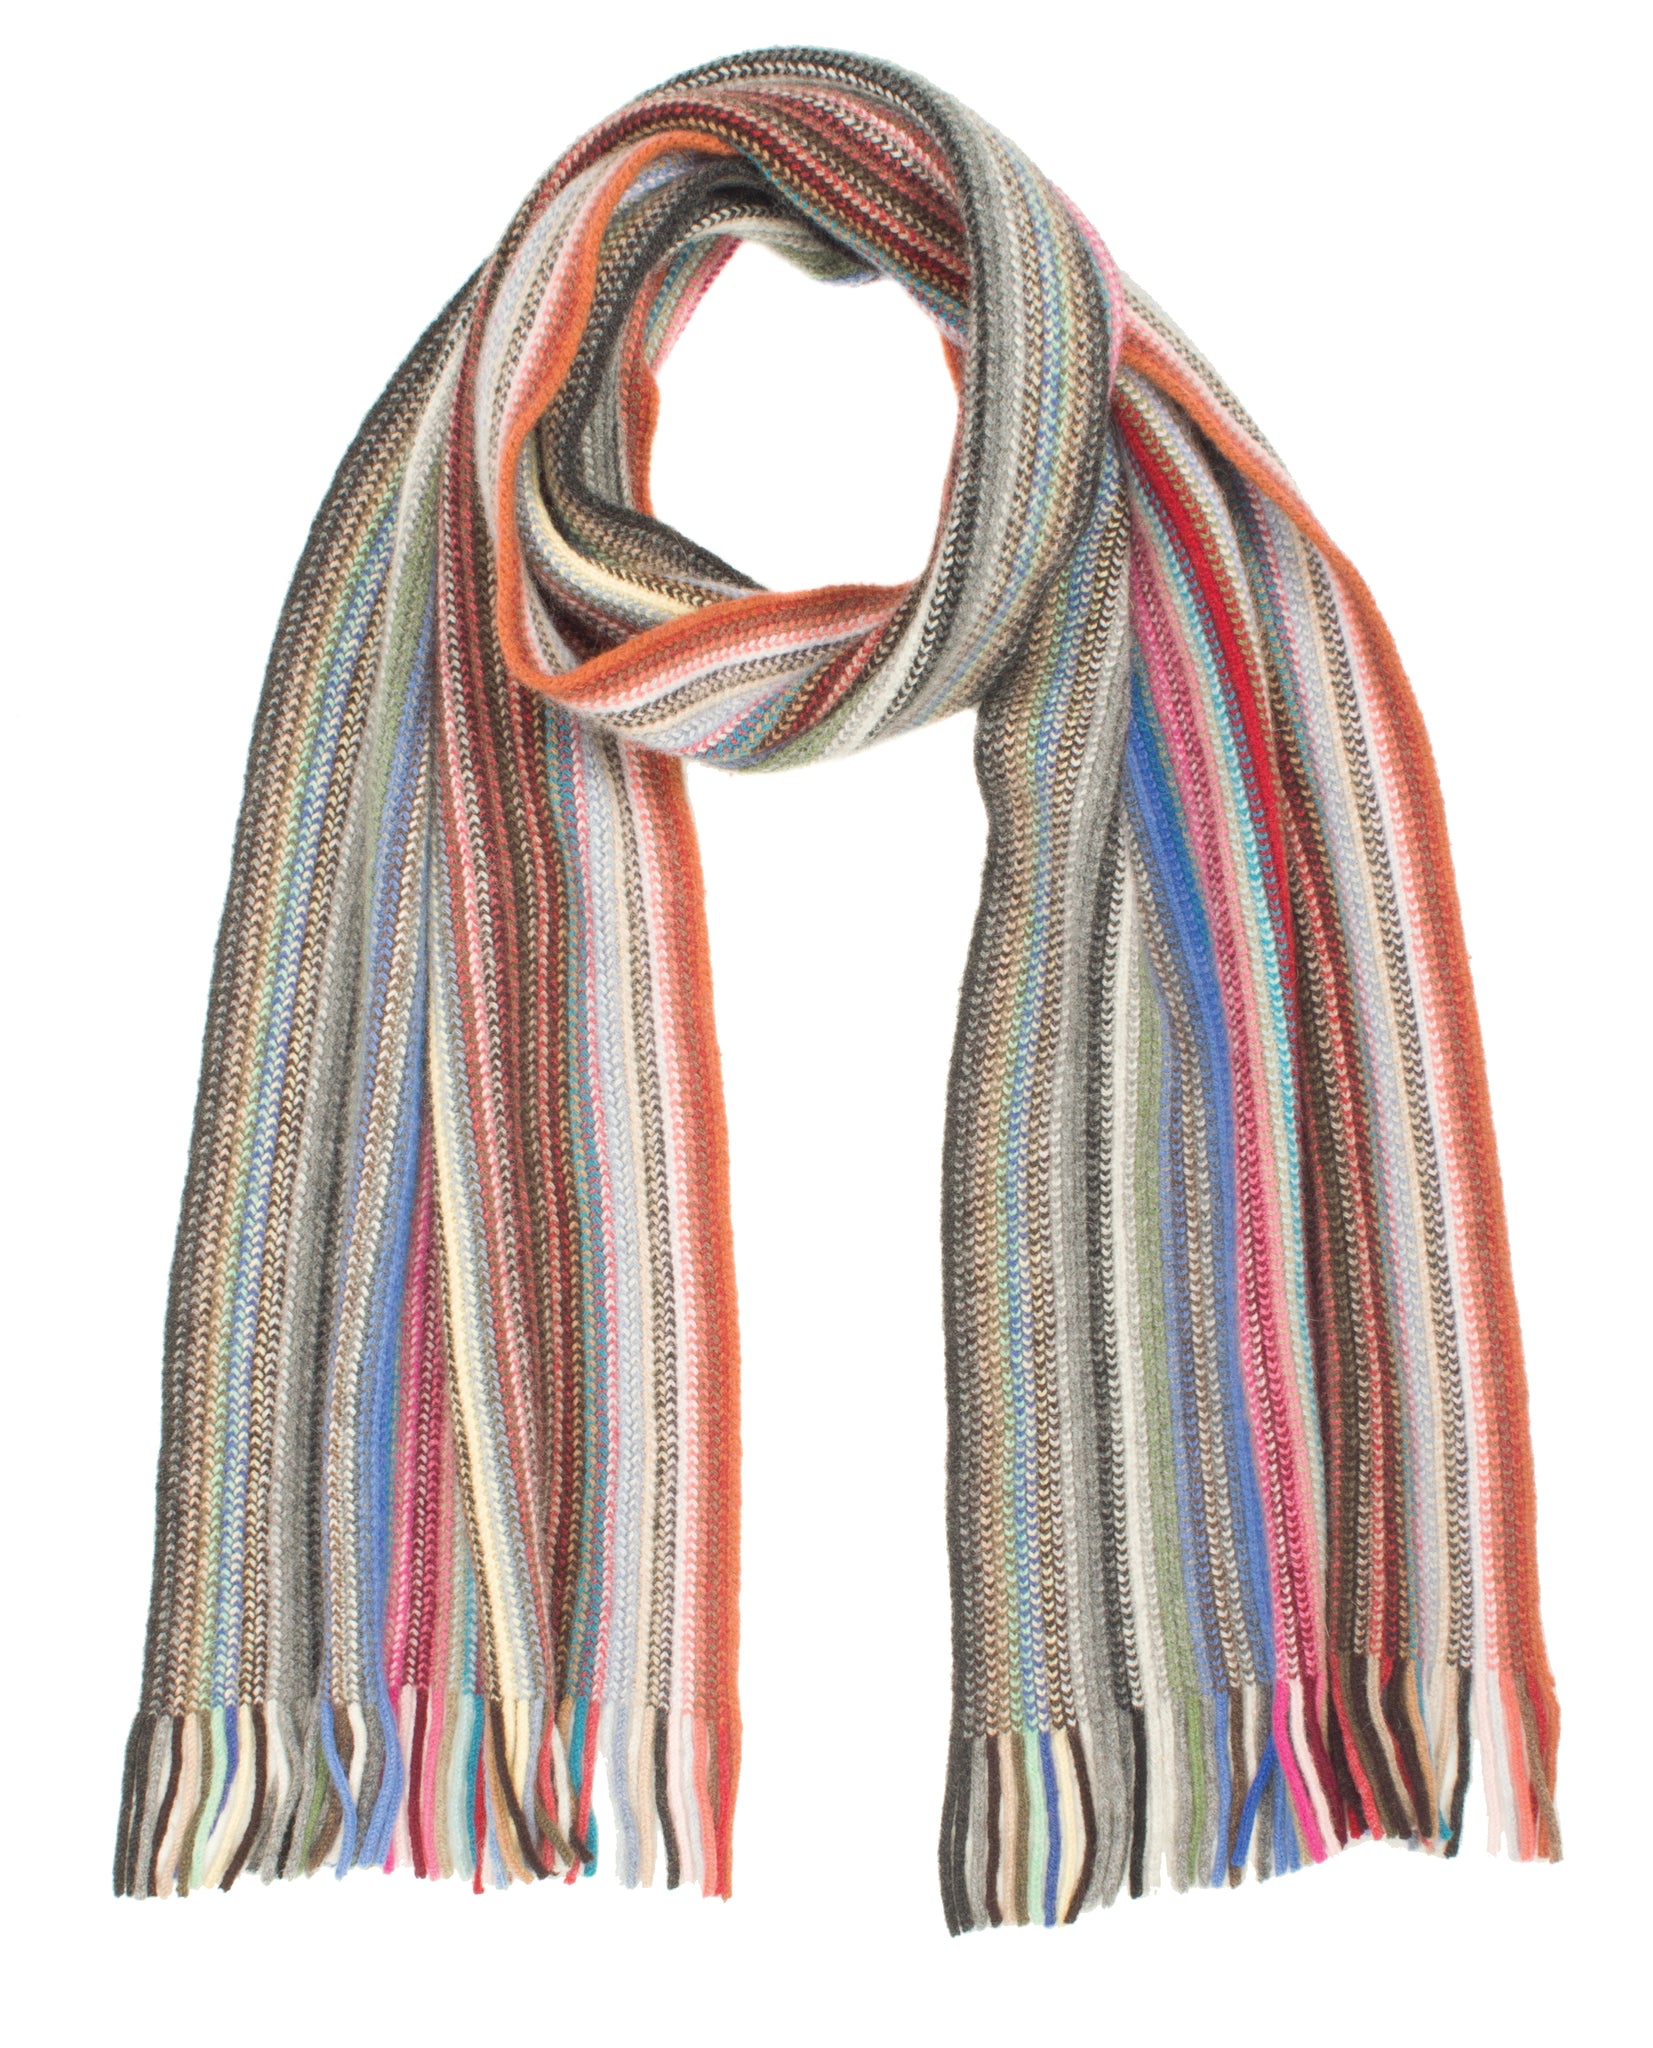 Glen Prince 75% Merino 25% Angora Lamora Warp knit scarf